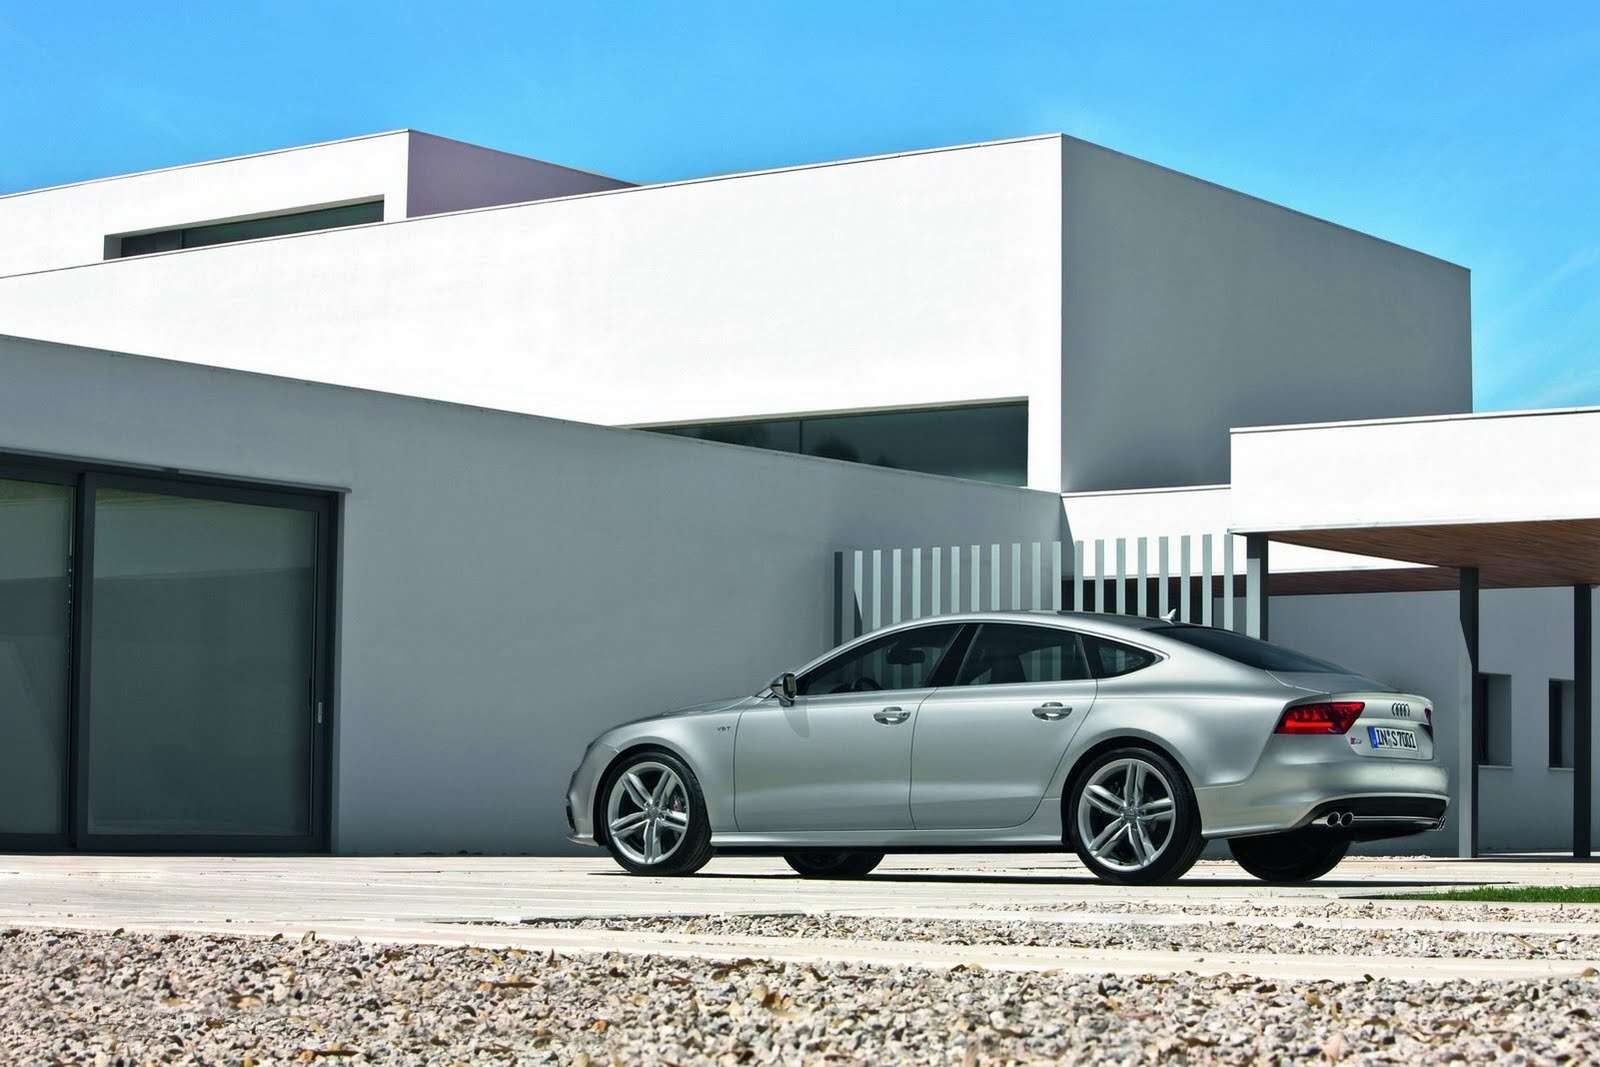 Nowe Audi S7 oficjalnie fot sierpien 2011